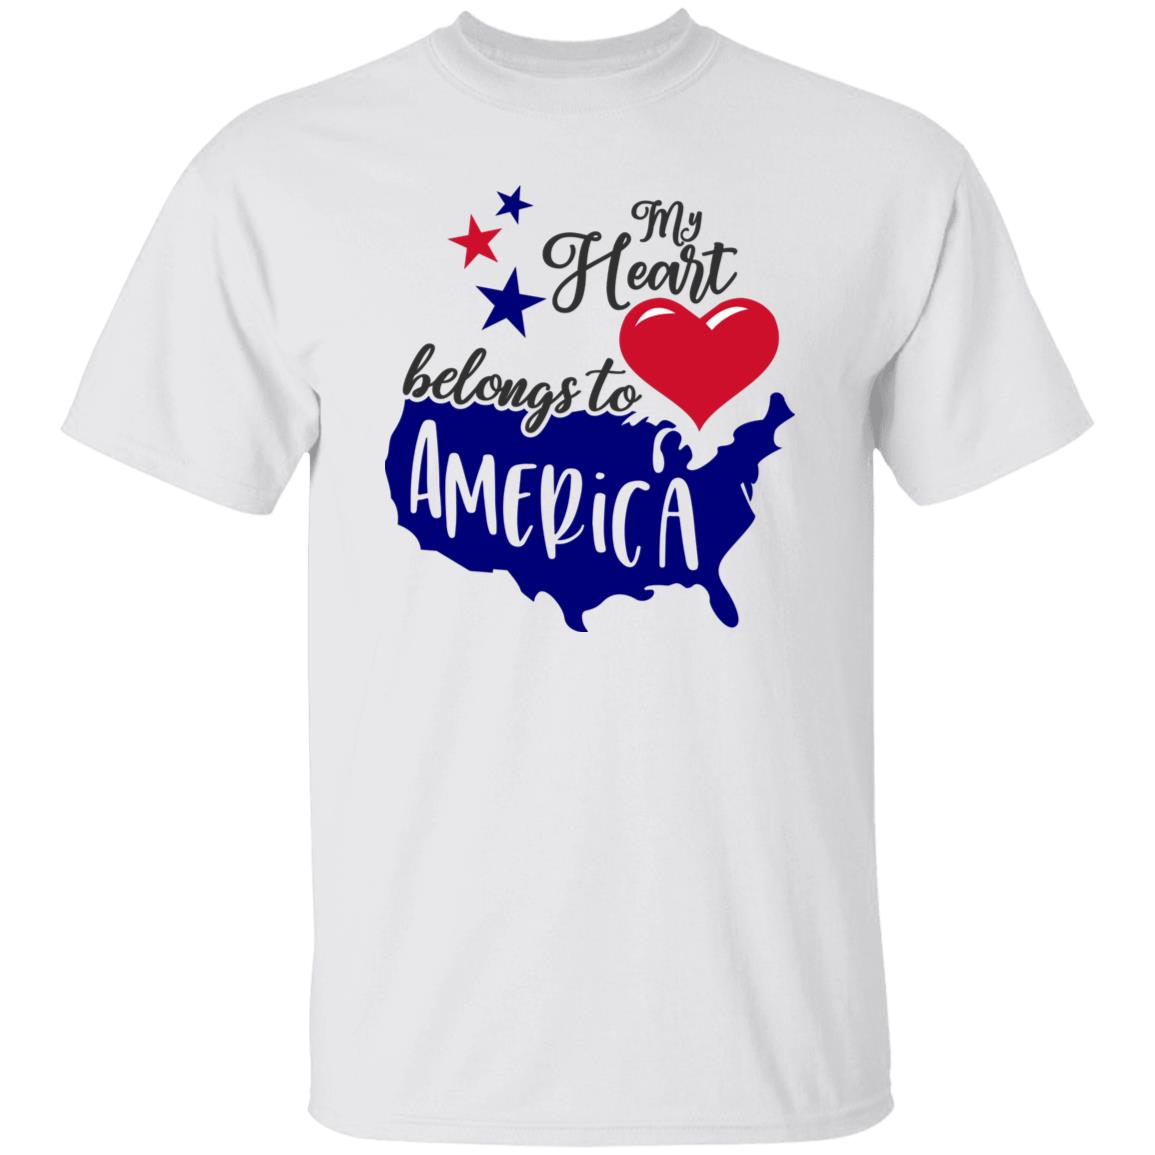 My Heart Belongs To America T-Shirt